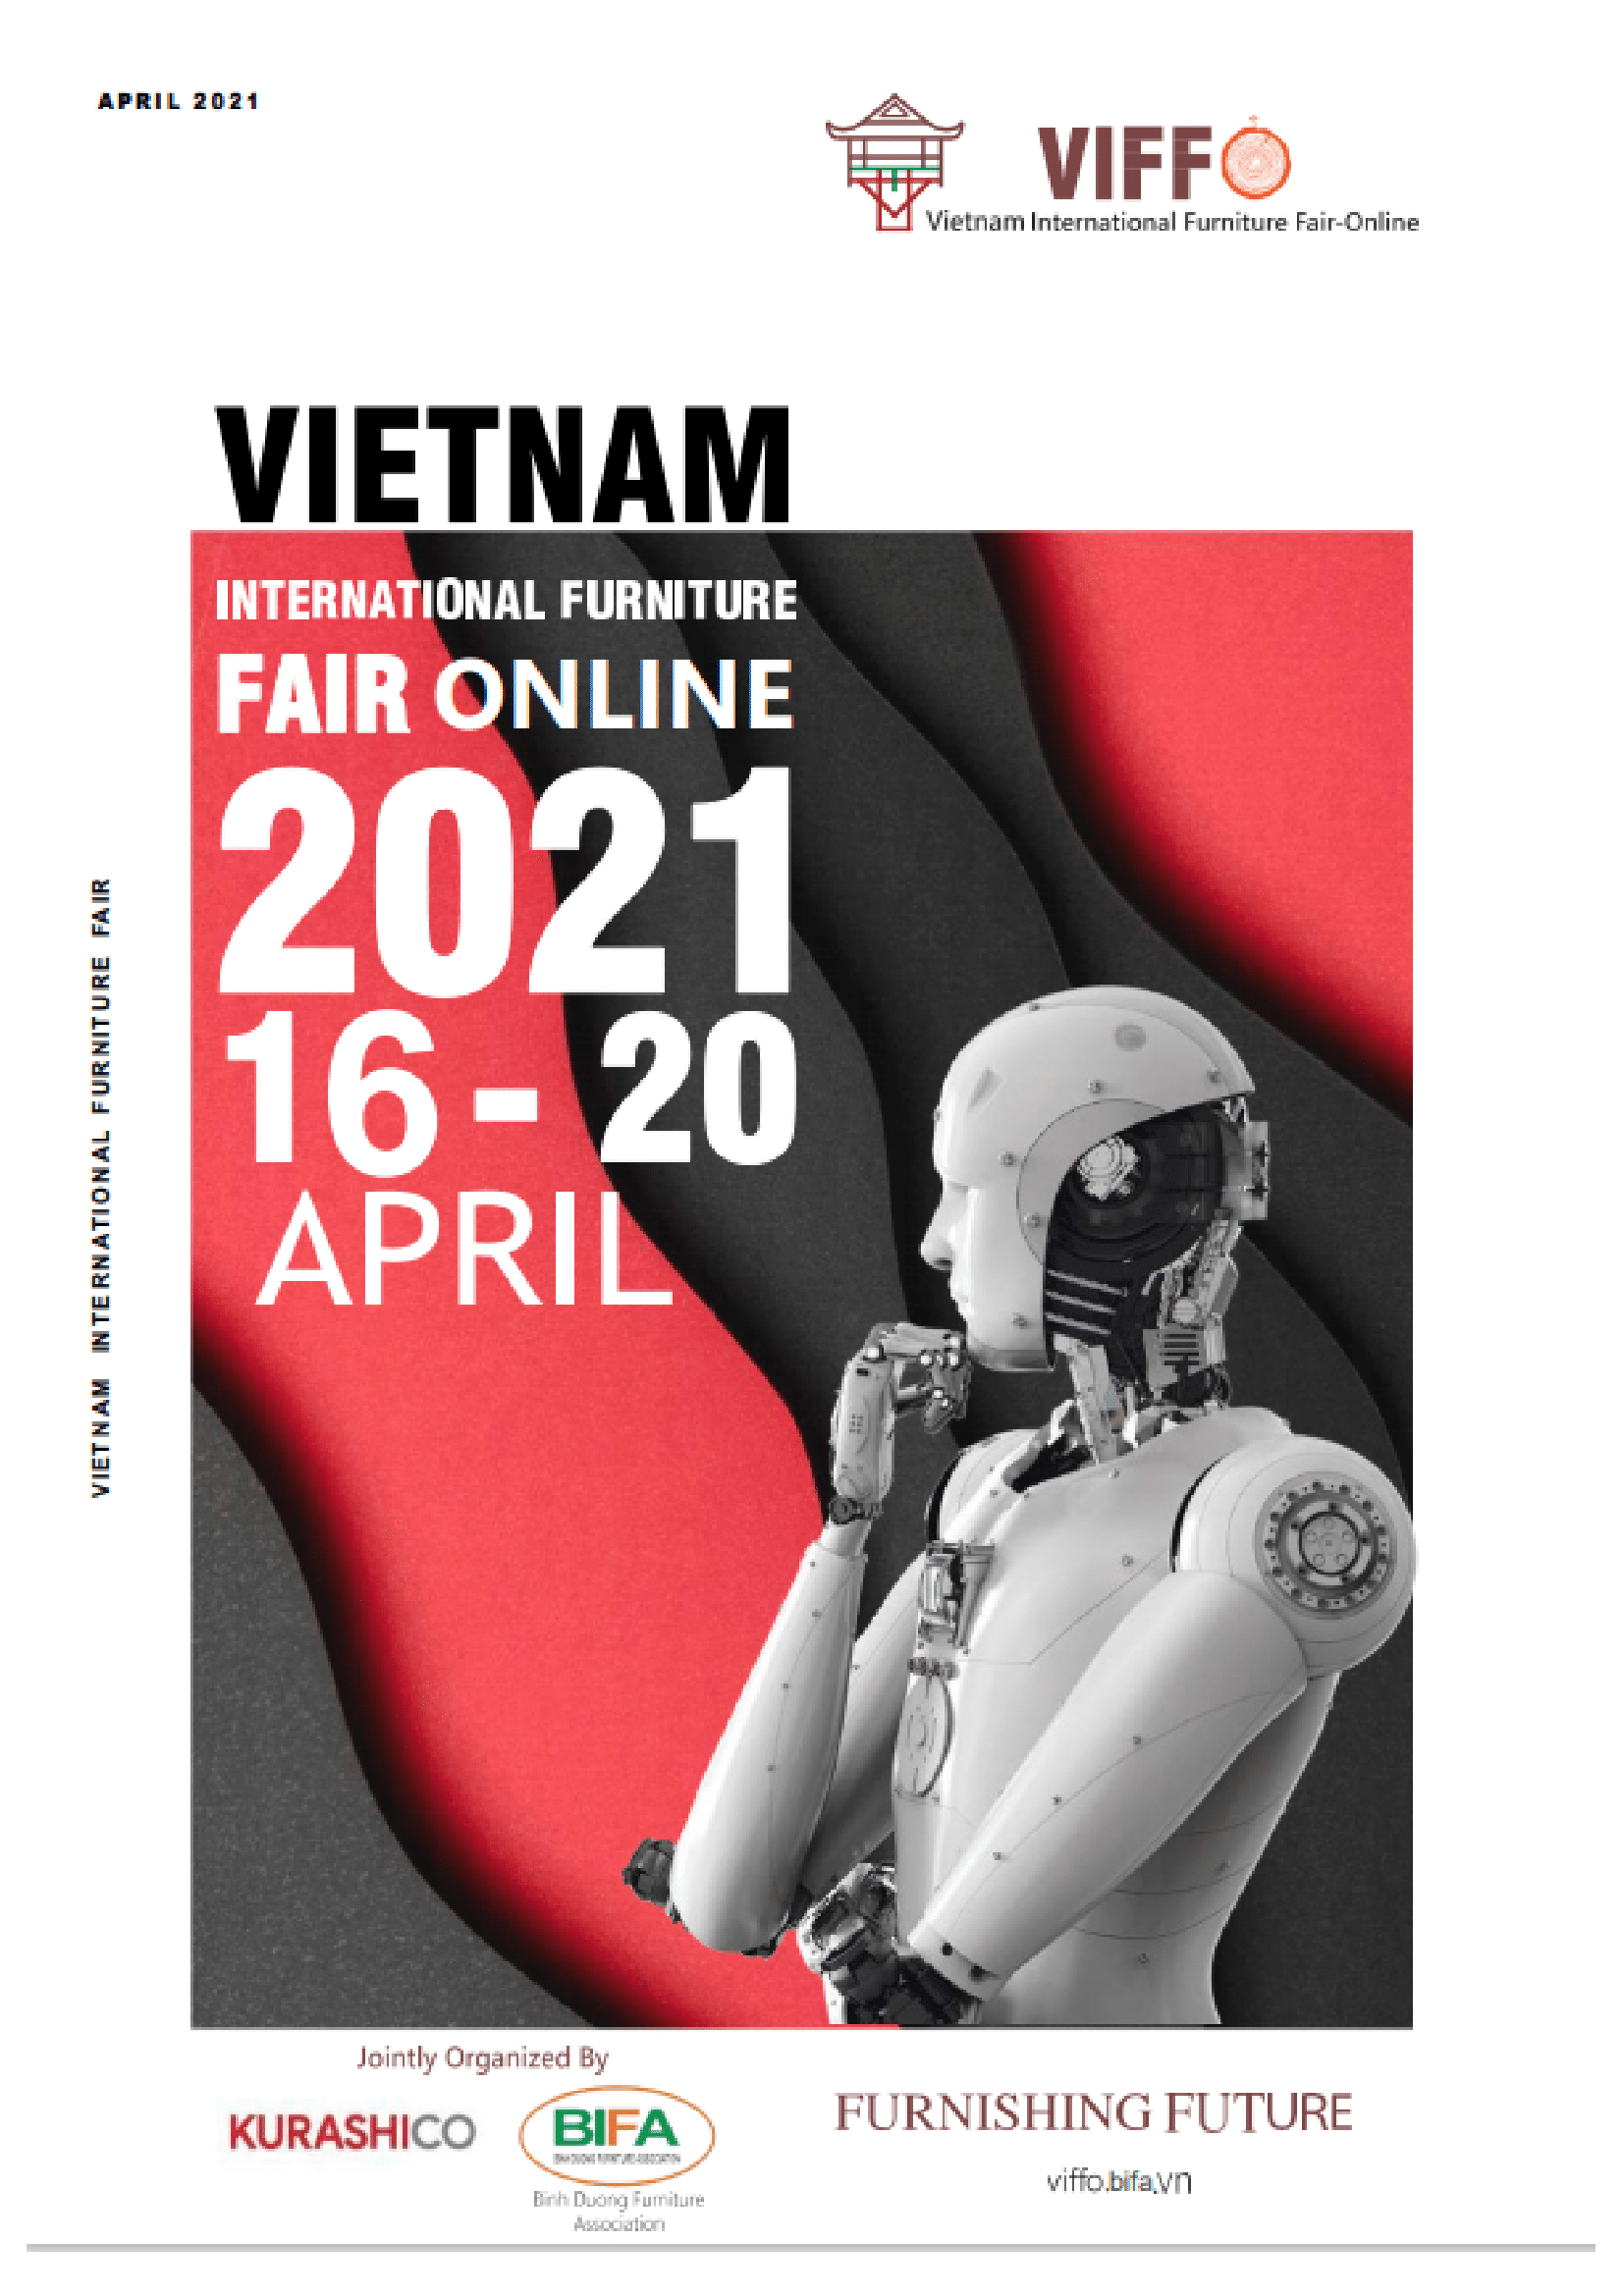 Vietnam International Furniture Fair Online (VIFFO) 2021